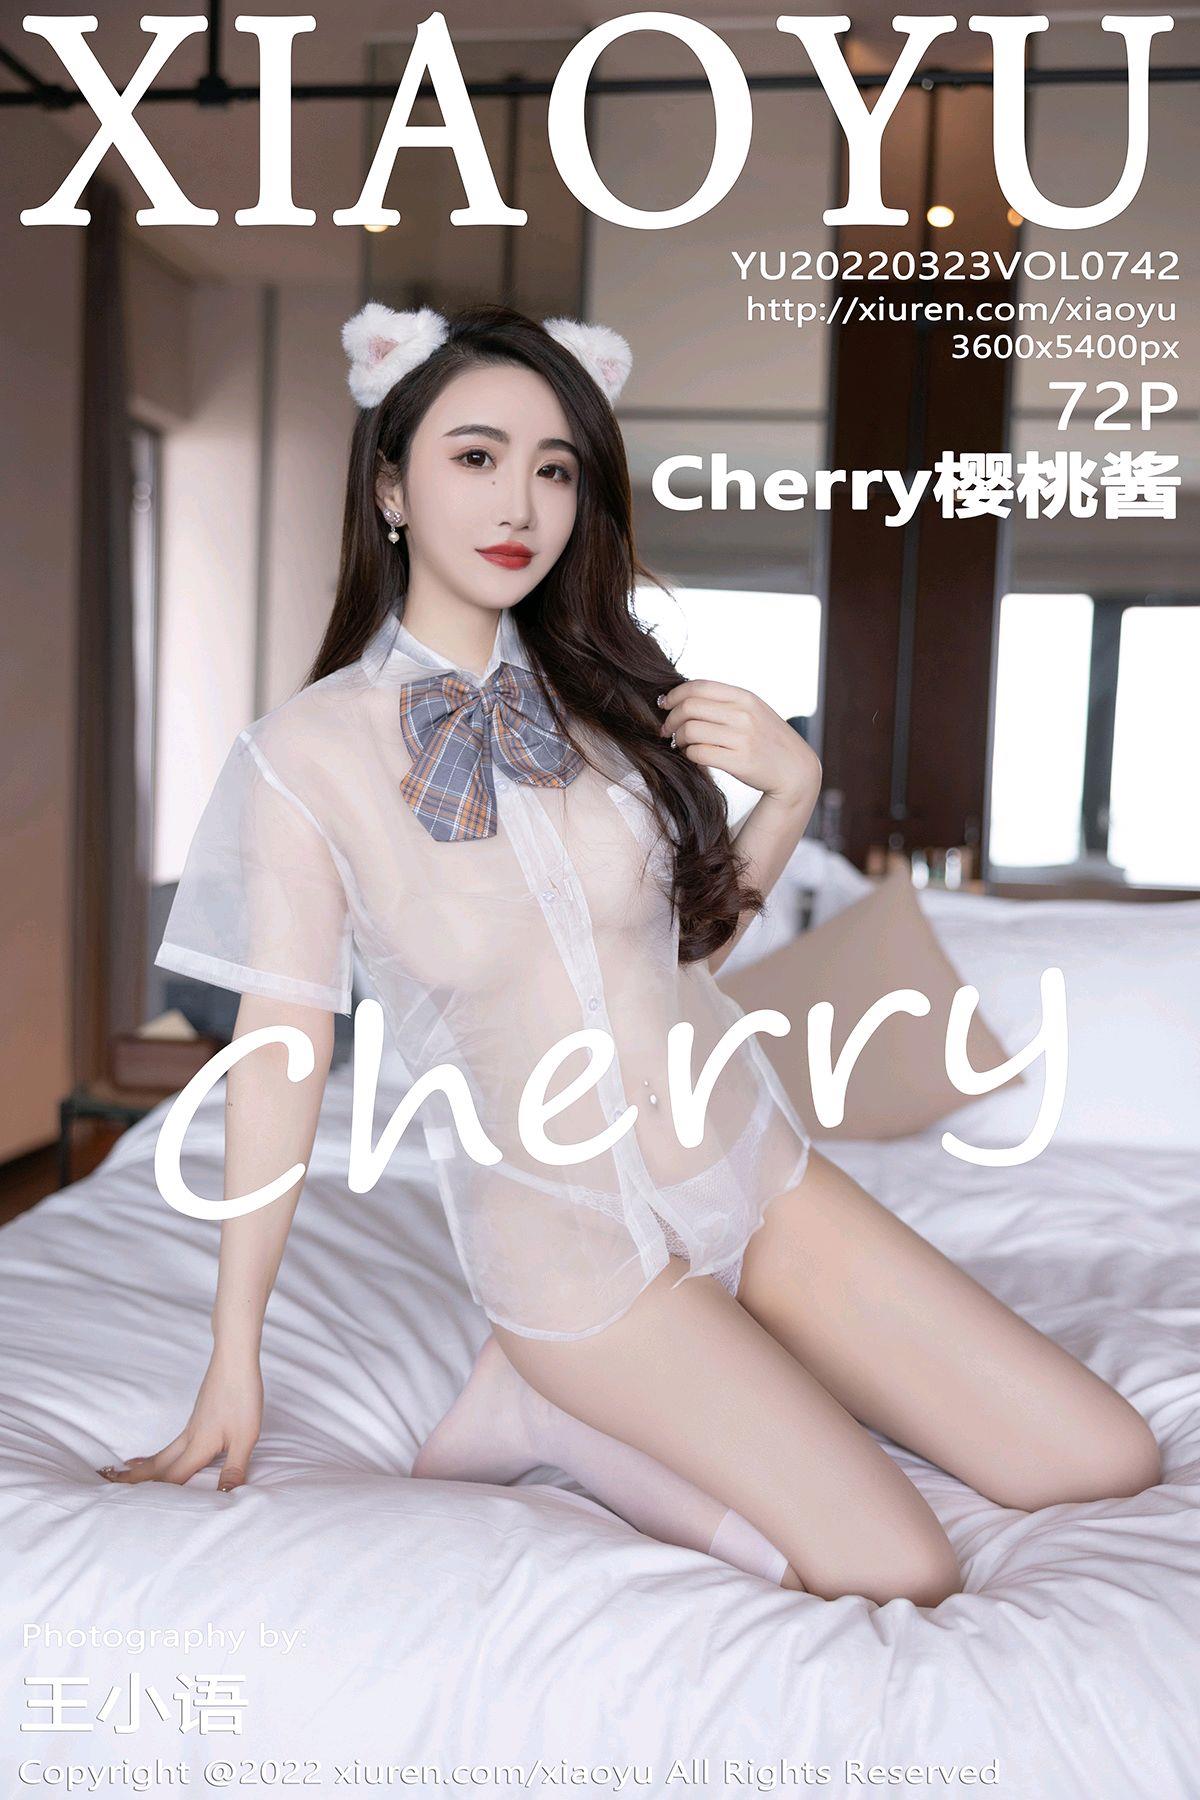 XIAOYU 语画界 2022.03.23 Vol.742 Cherry樱桃酱 - 73.jpg